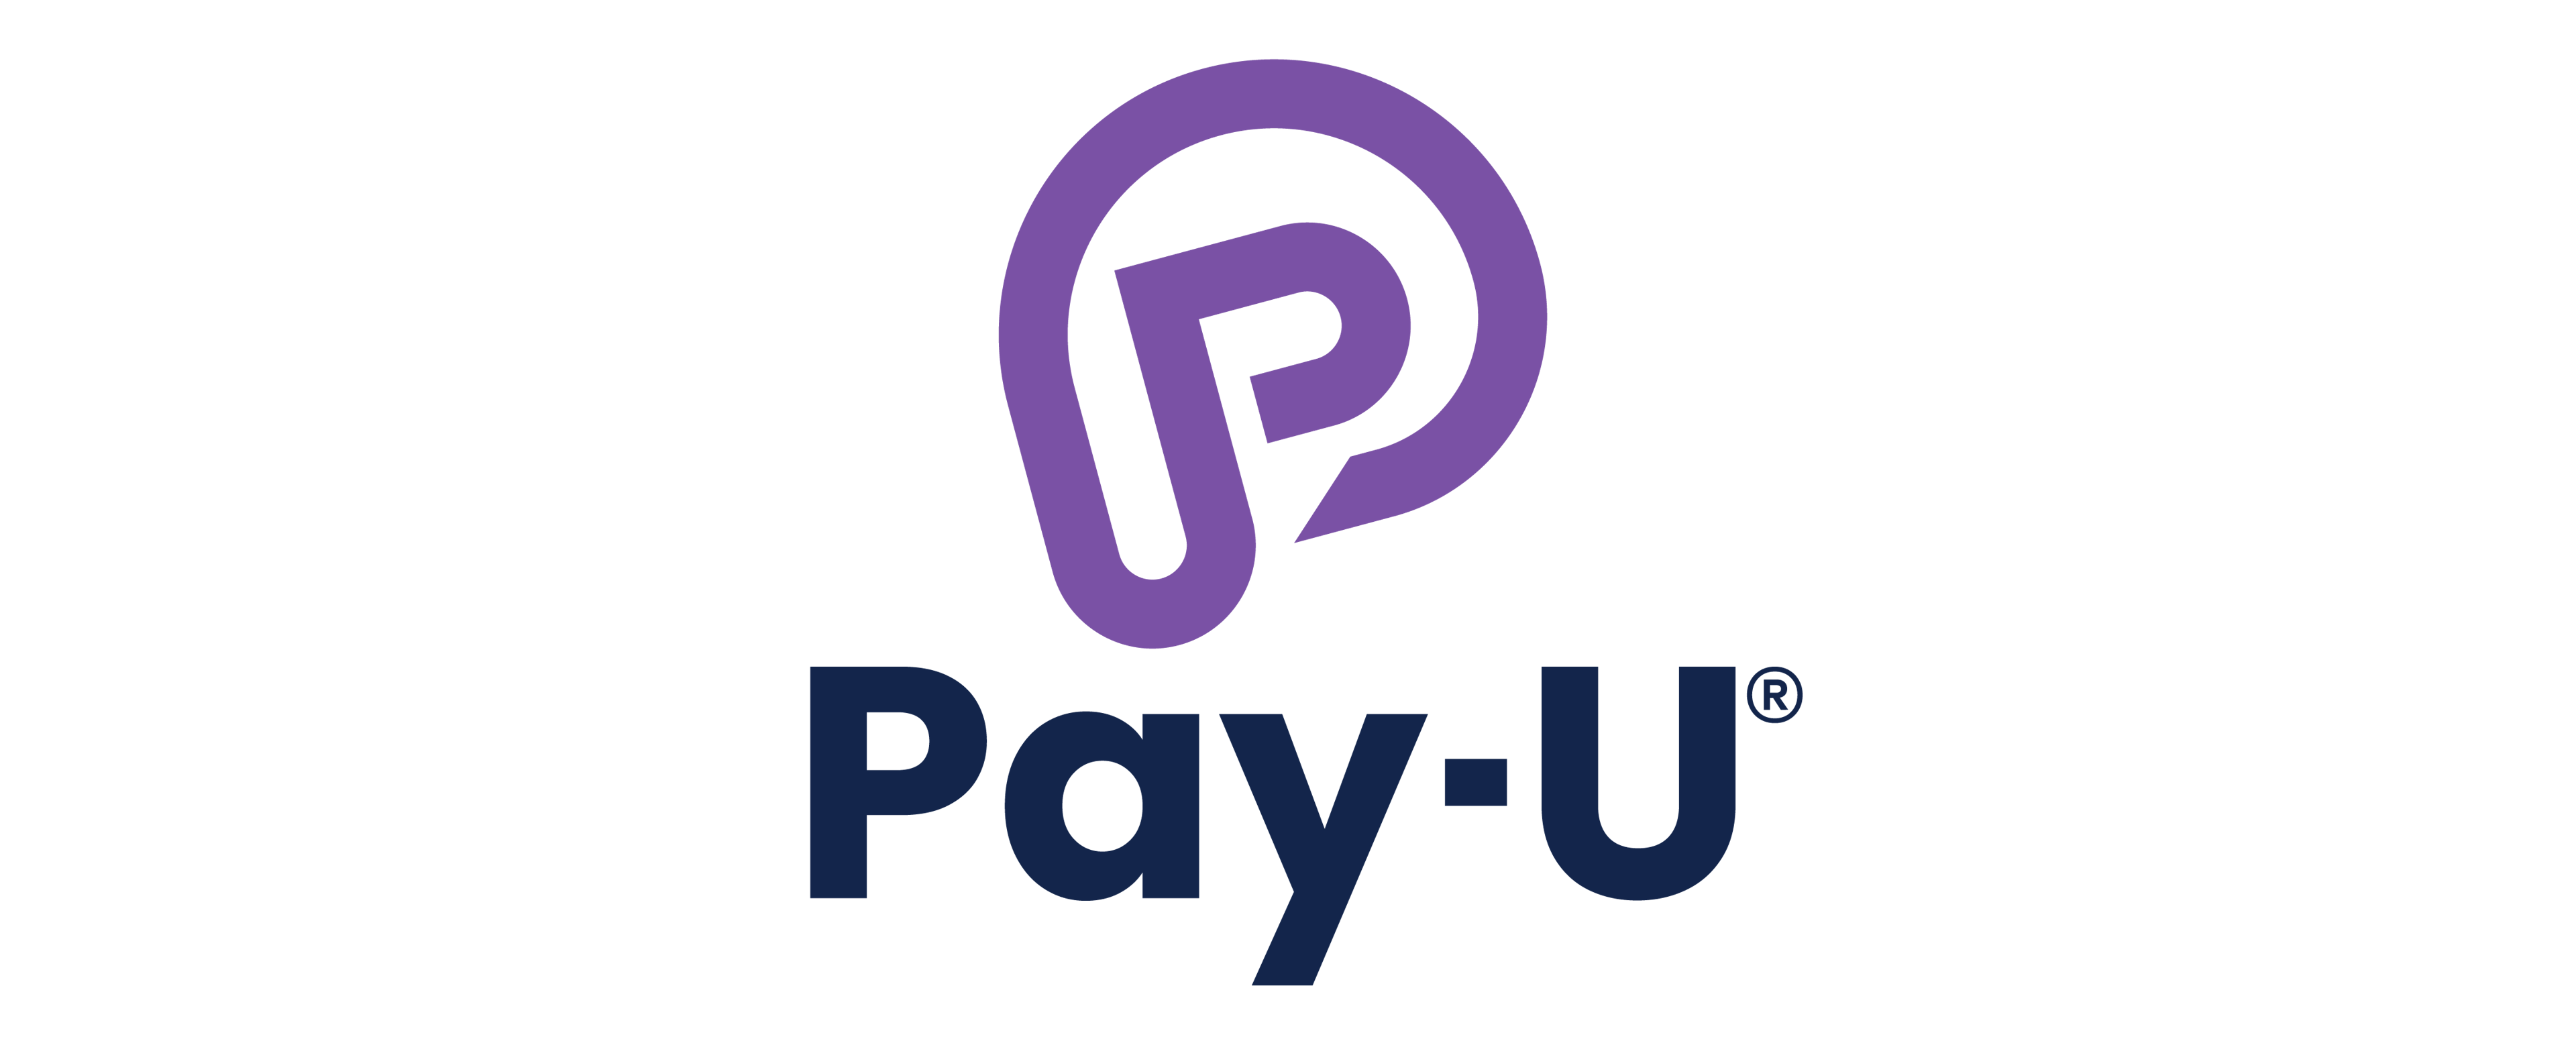 Pay-U Logo